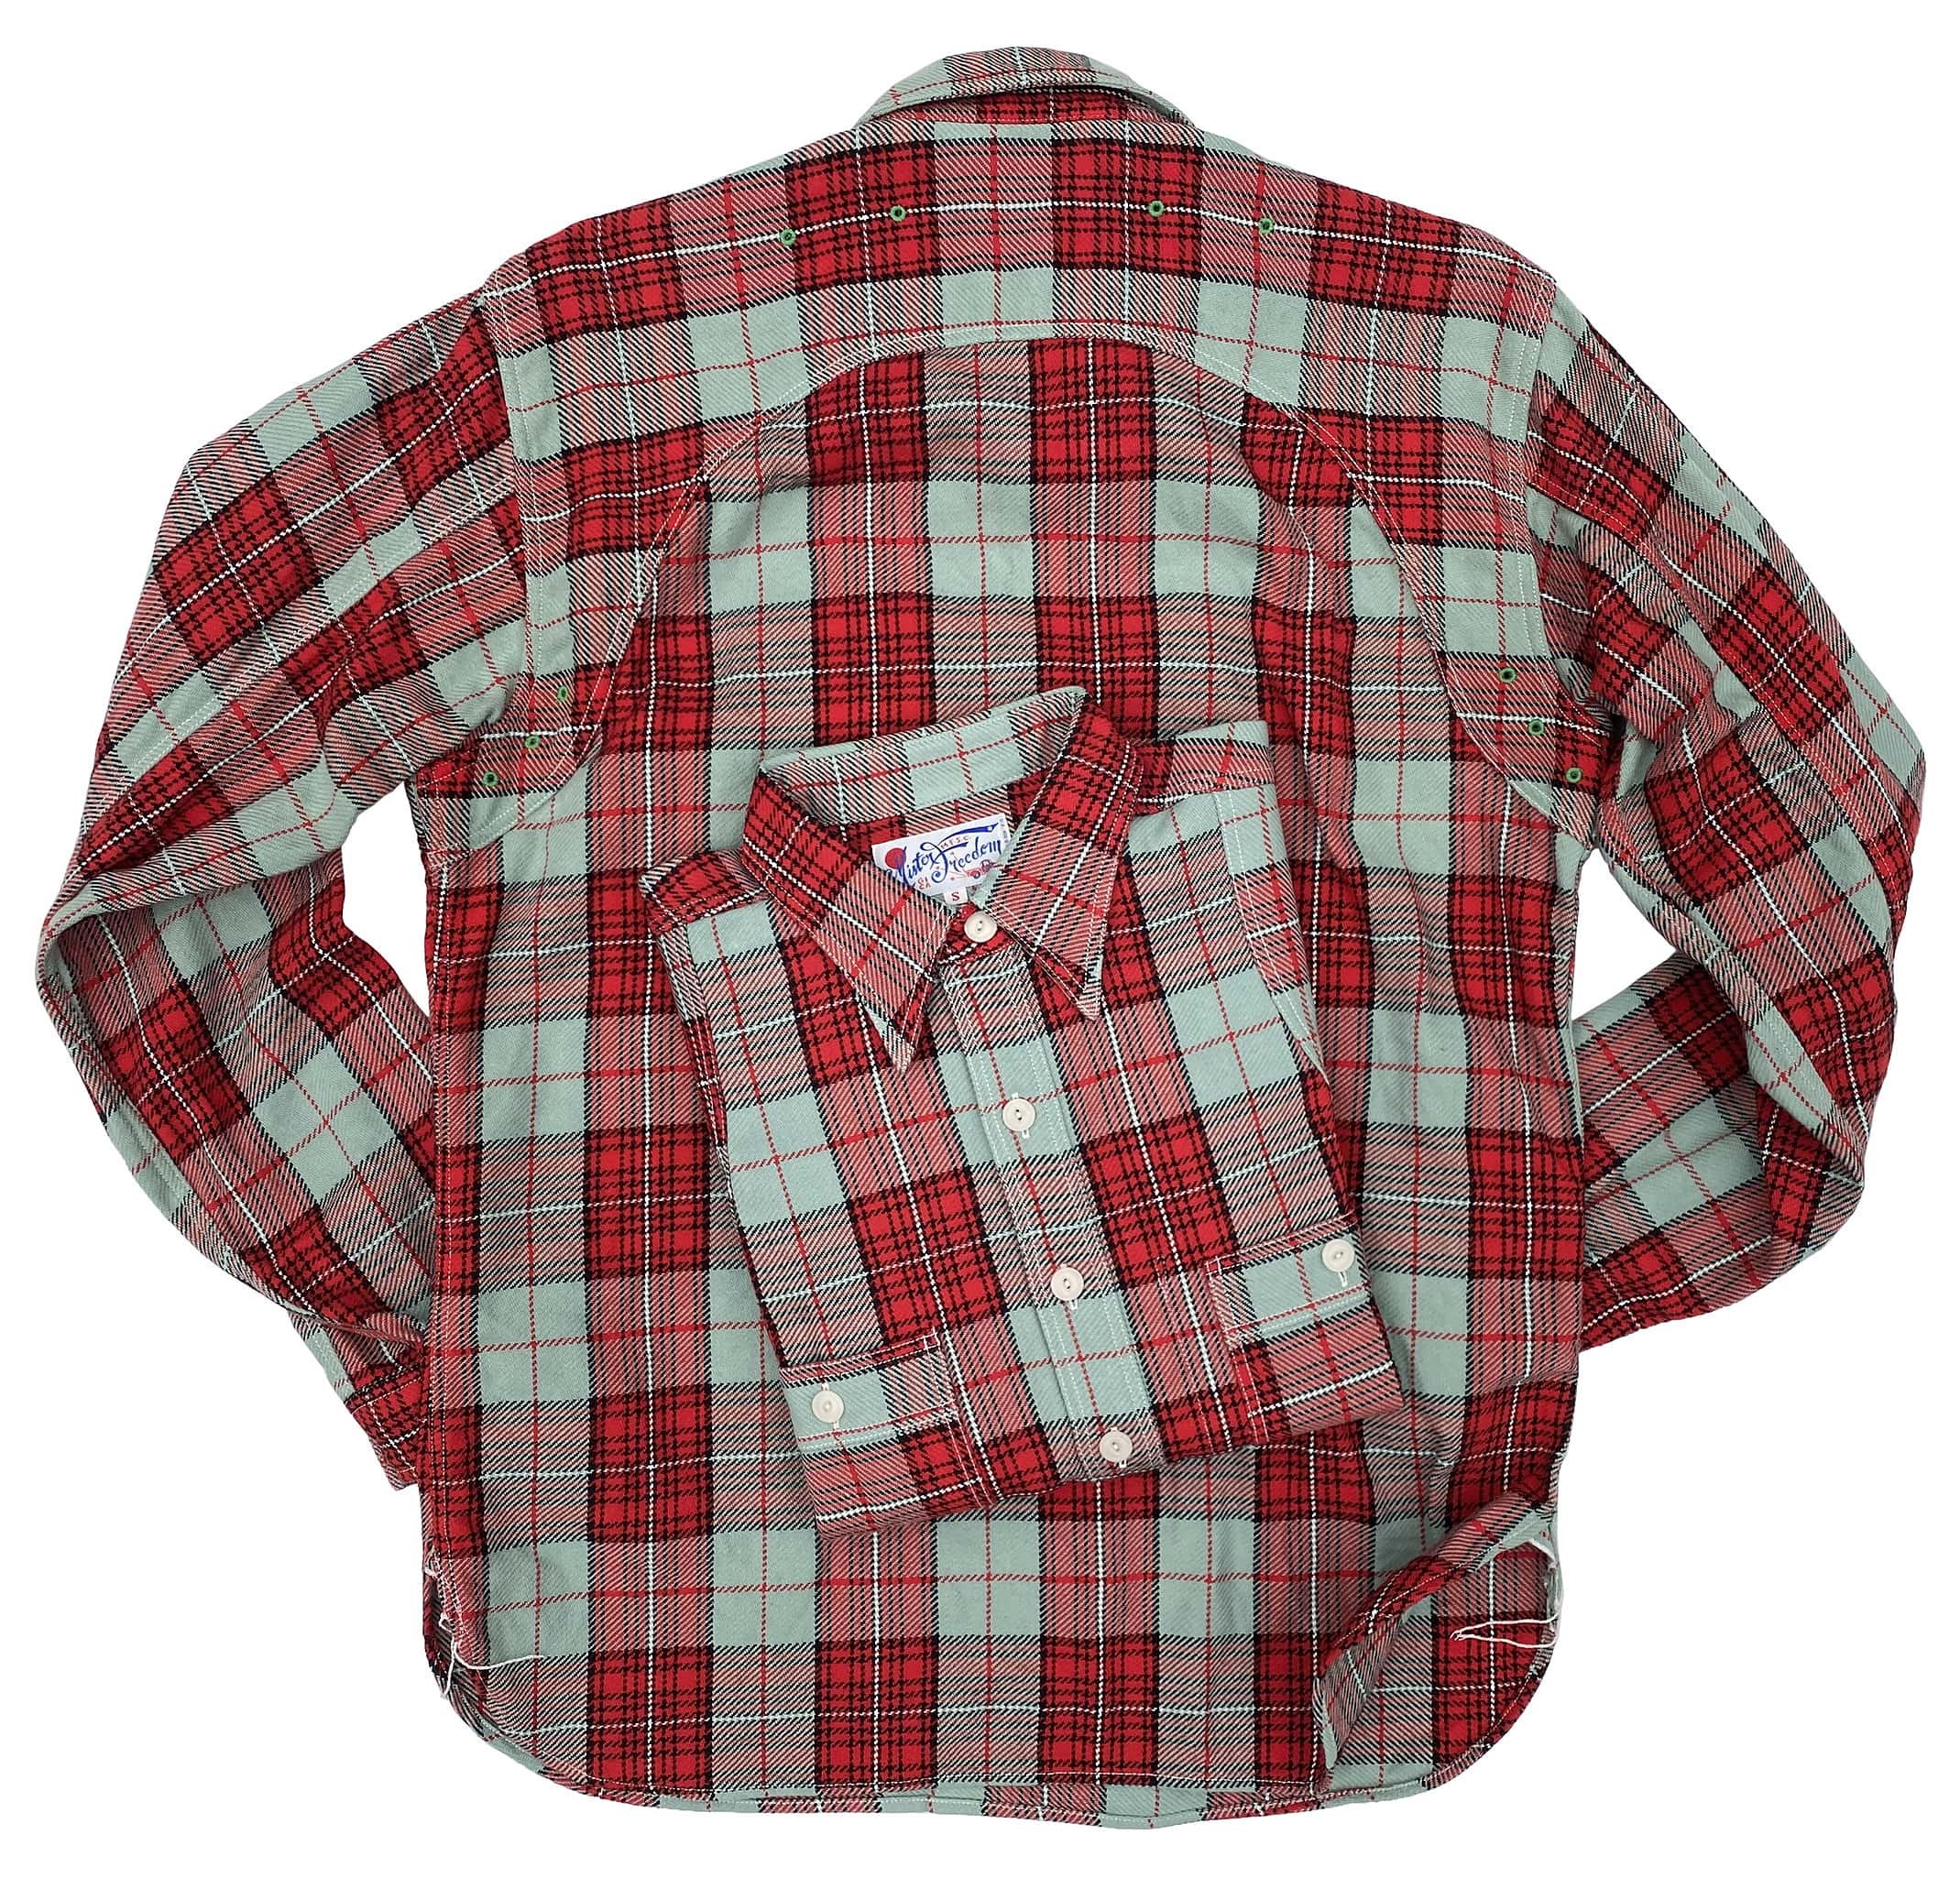 Mister Freedom® SECOYA Shirt (“McG” plaid heavy flannel) & DUDE 